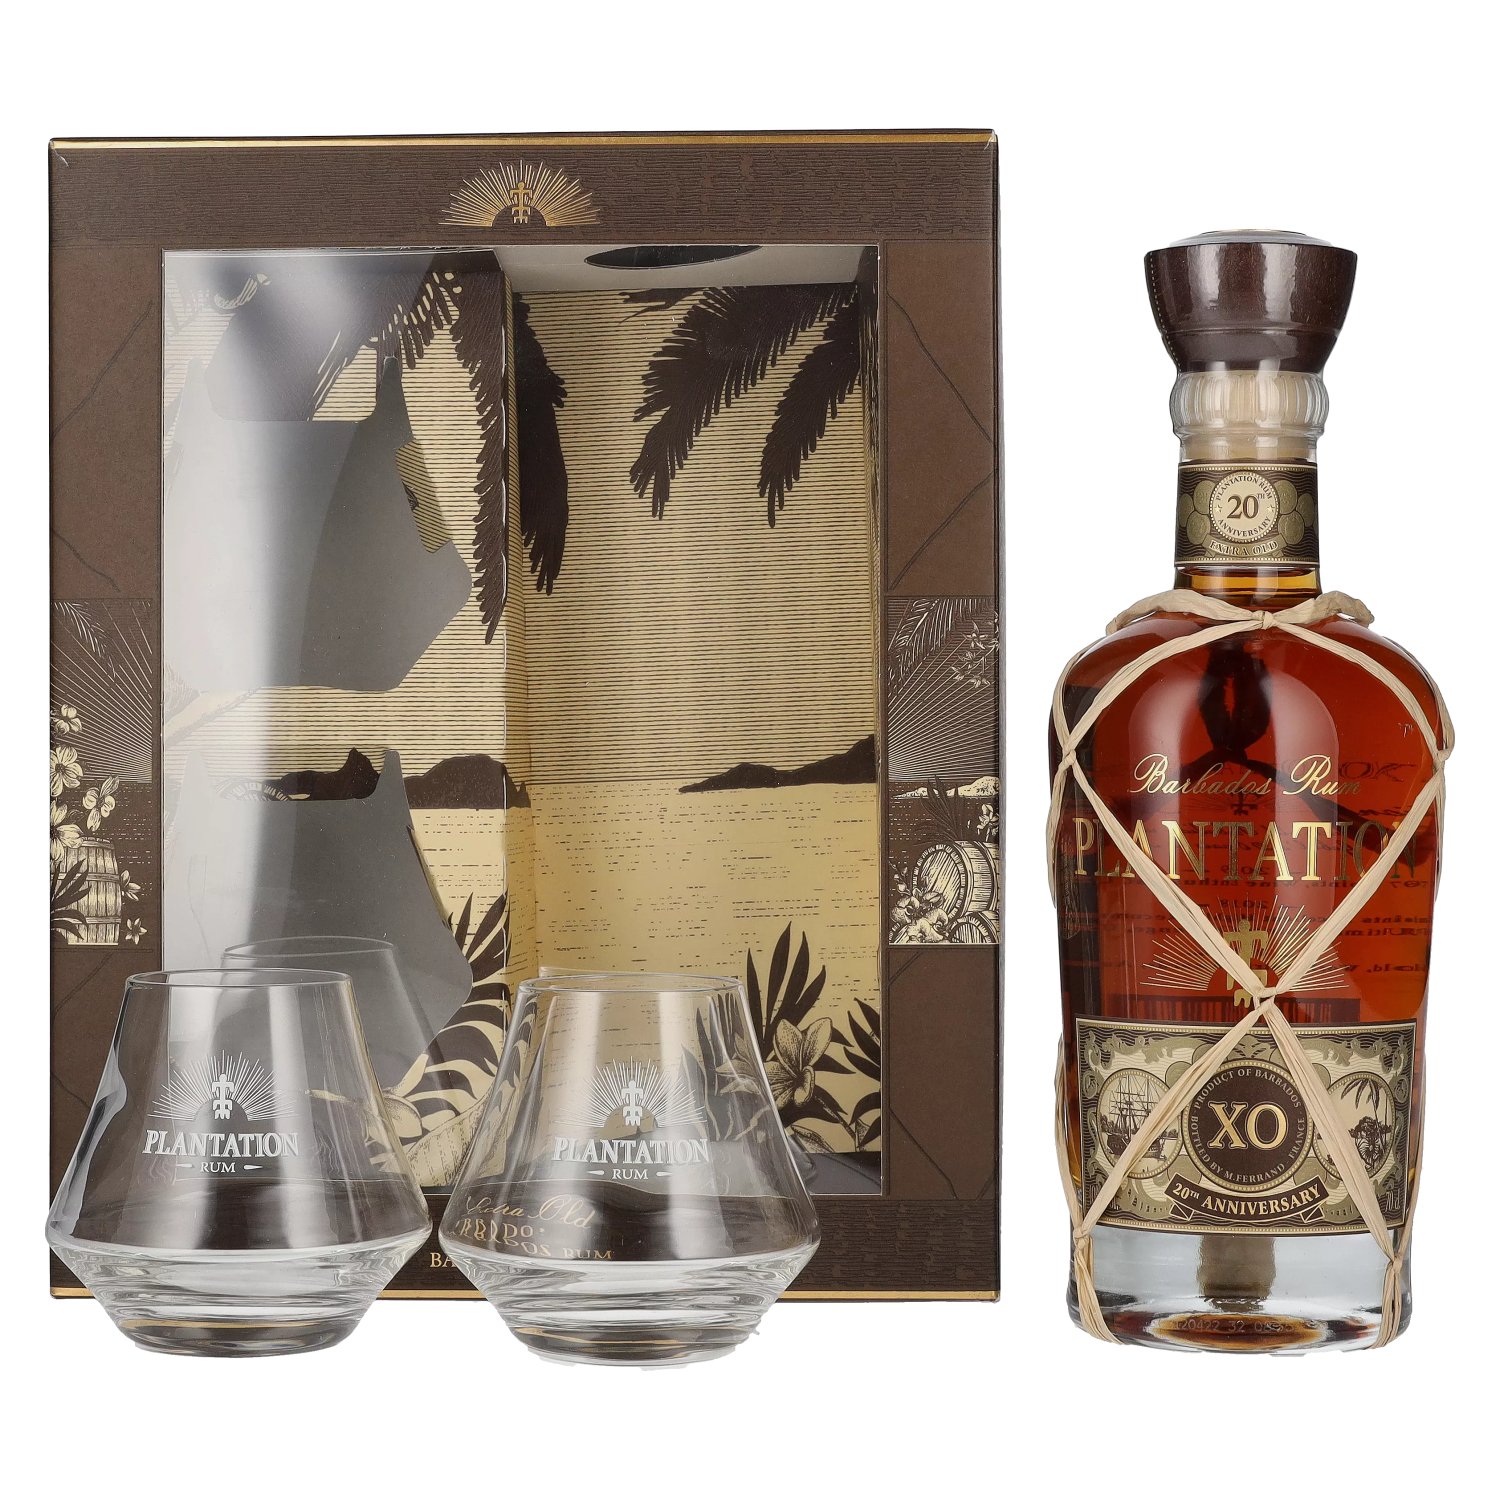 Plantation Rum BARBADOS XO 20th Anniversary 40% Vol. 0,7l in